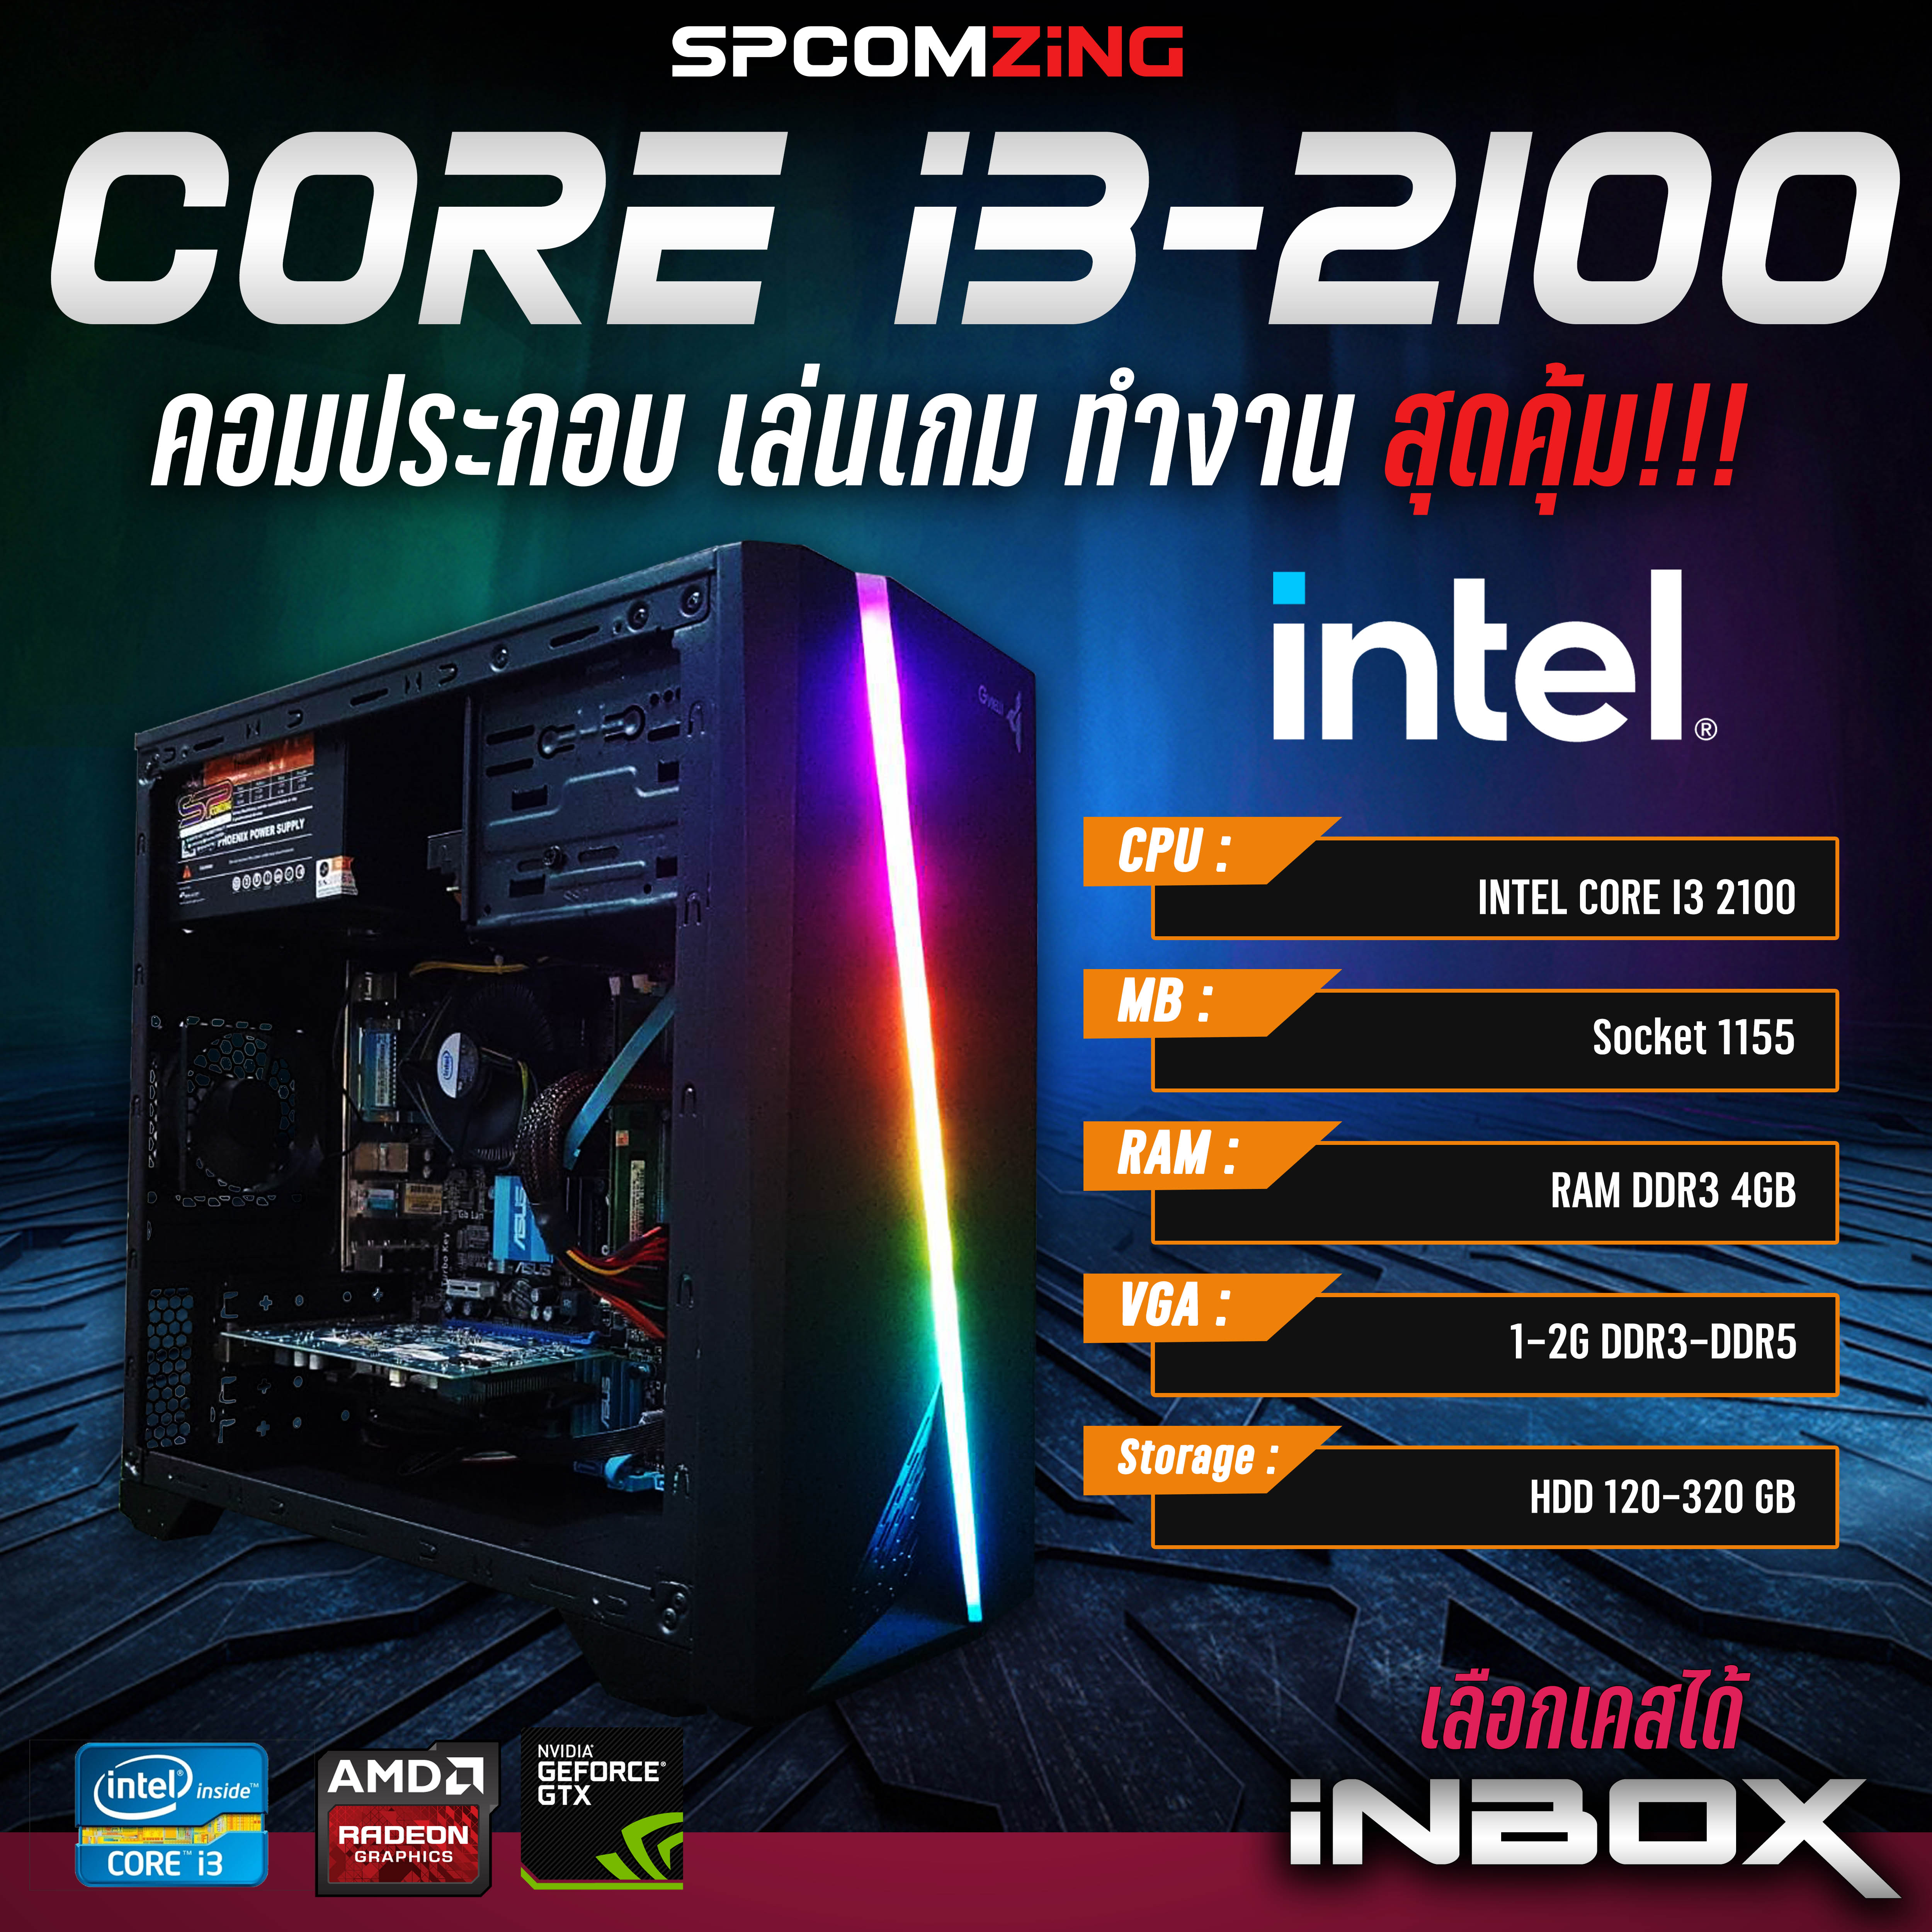 [COMZING] คอมพิวเตอร์ คอมเล่นเกม Core i3-2100 RAM 4 GB การ์ดจอแยก 1G DDR3-DDR5 เล่นเกมแรงๆ PubgMobile SF PB ทำงาน ดูหนังลื่นๆ พร้อมใช้งาน